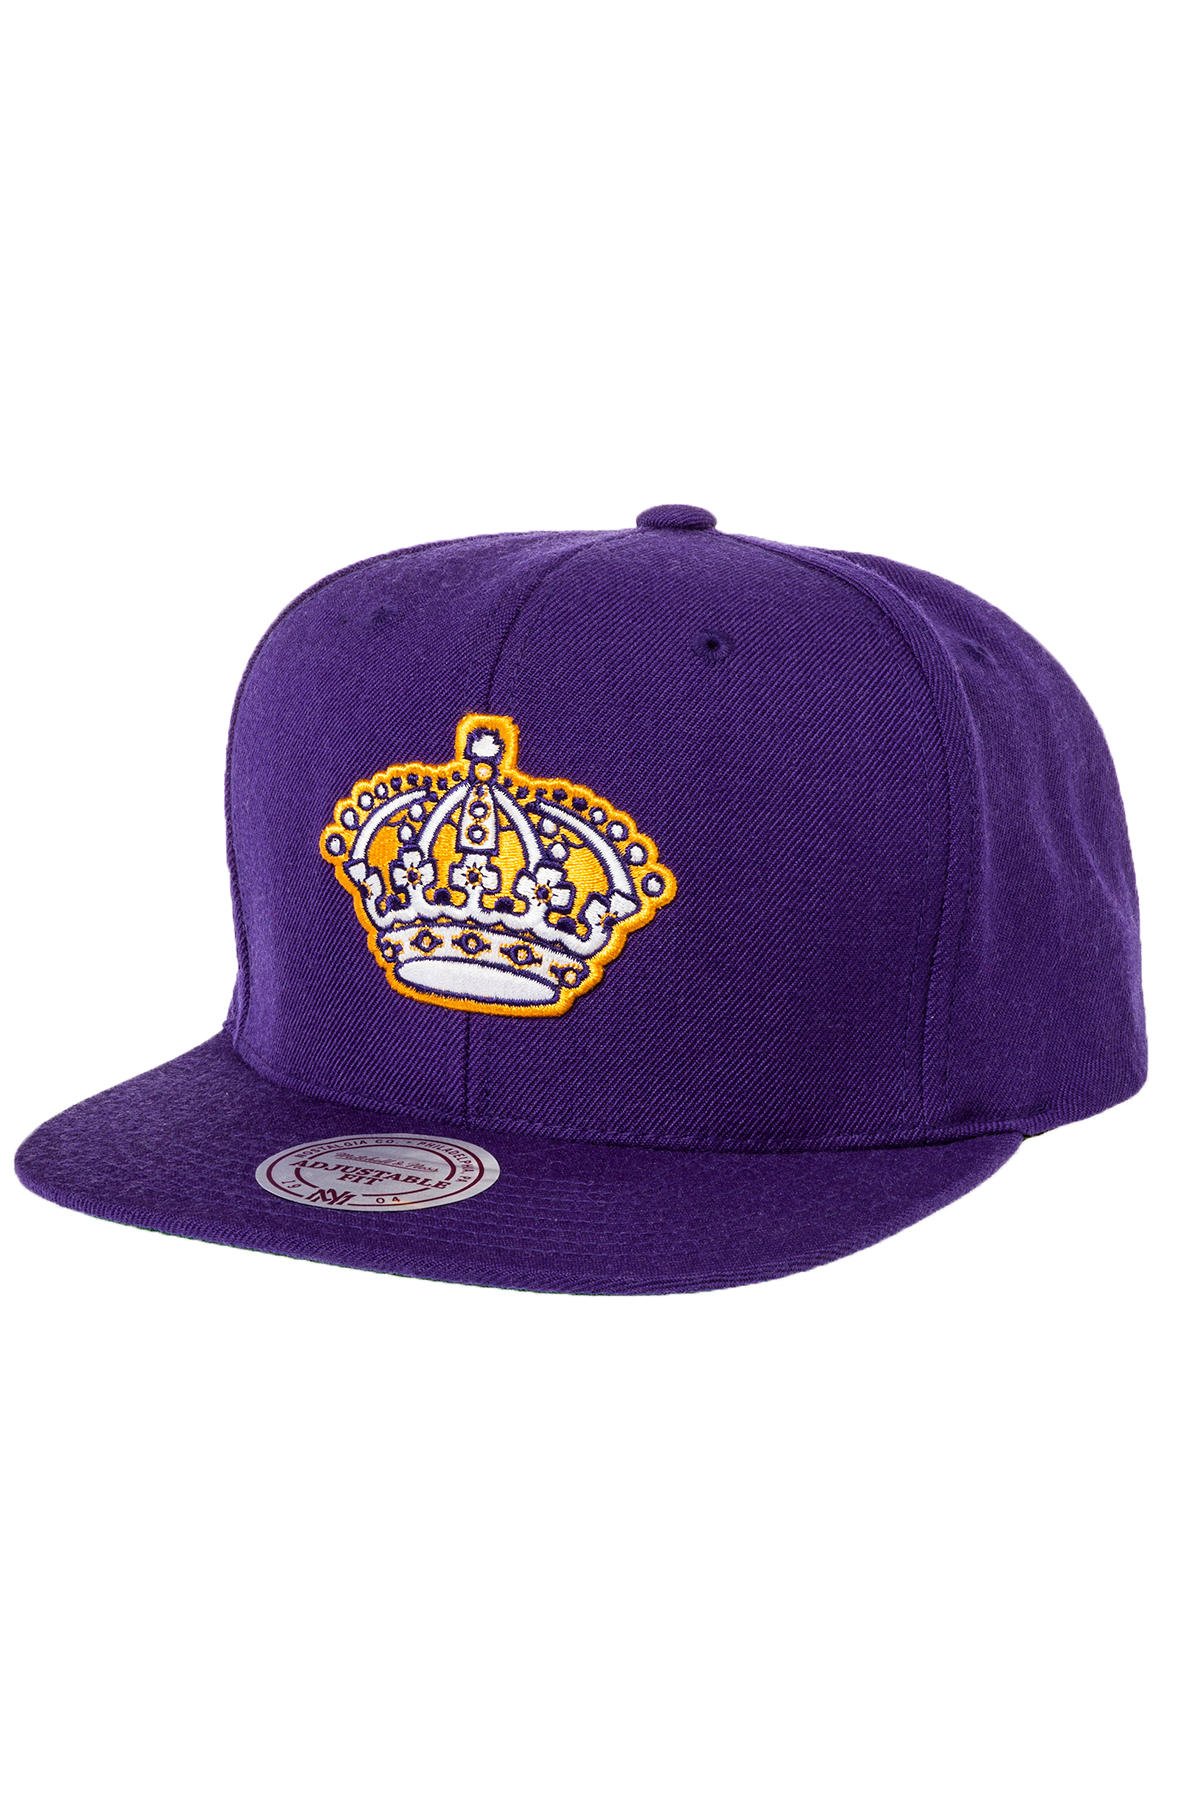 purple and yellow la kings hat